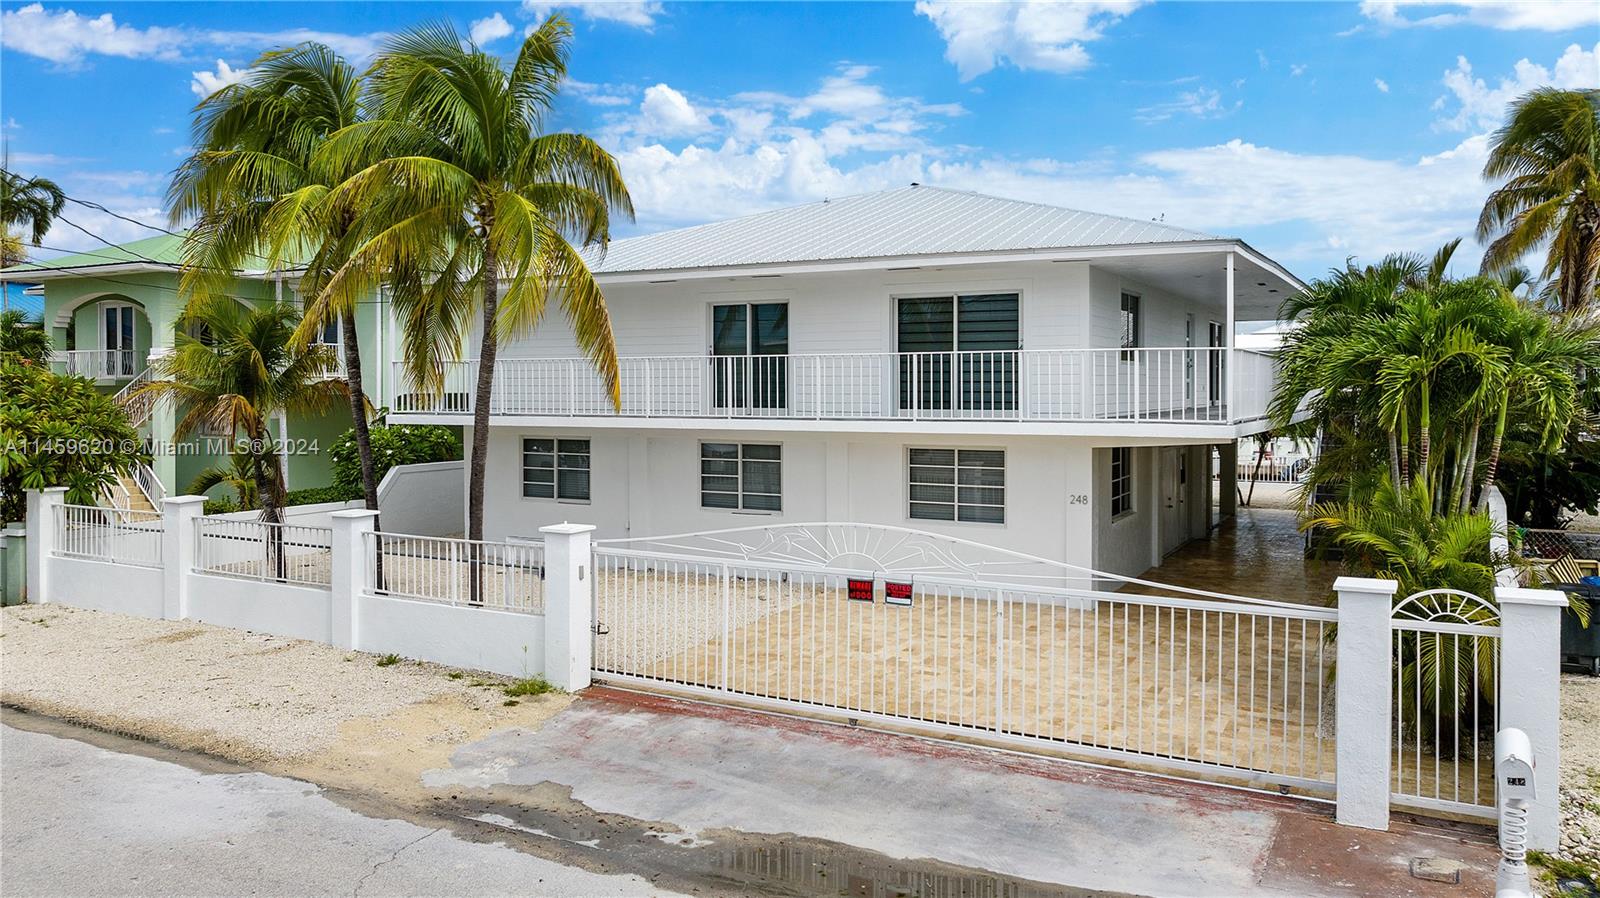 Property for Sale at 248 Atlantic Blvd Blvd, Key Largo, Monroe County, Florida - Bedrooms: 4 
Bathrooms: 5  - $2,750,000